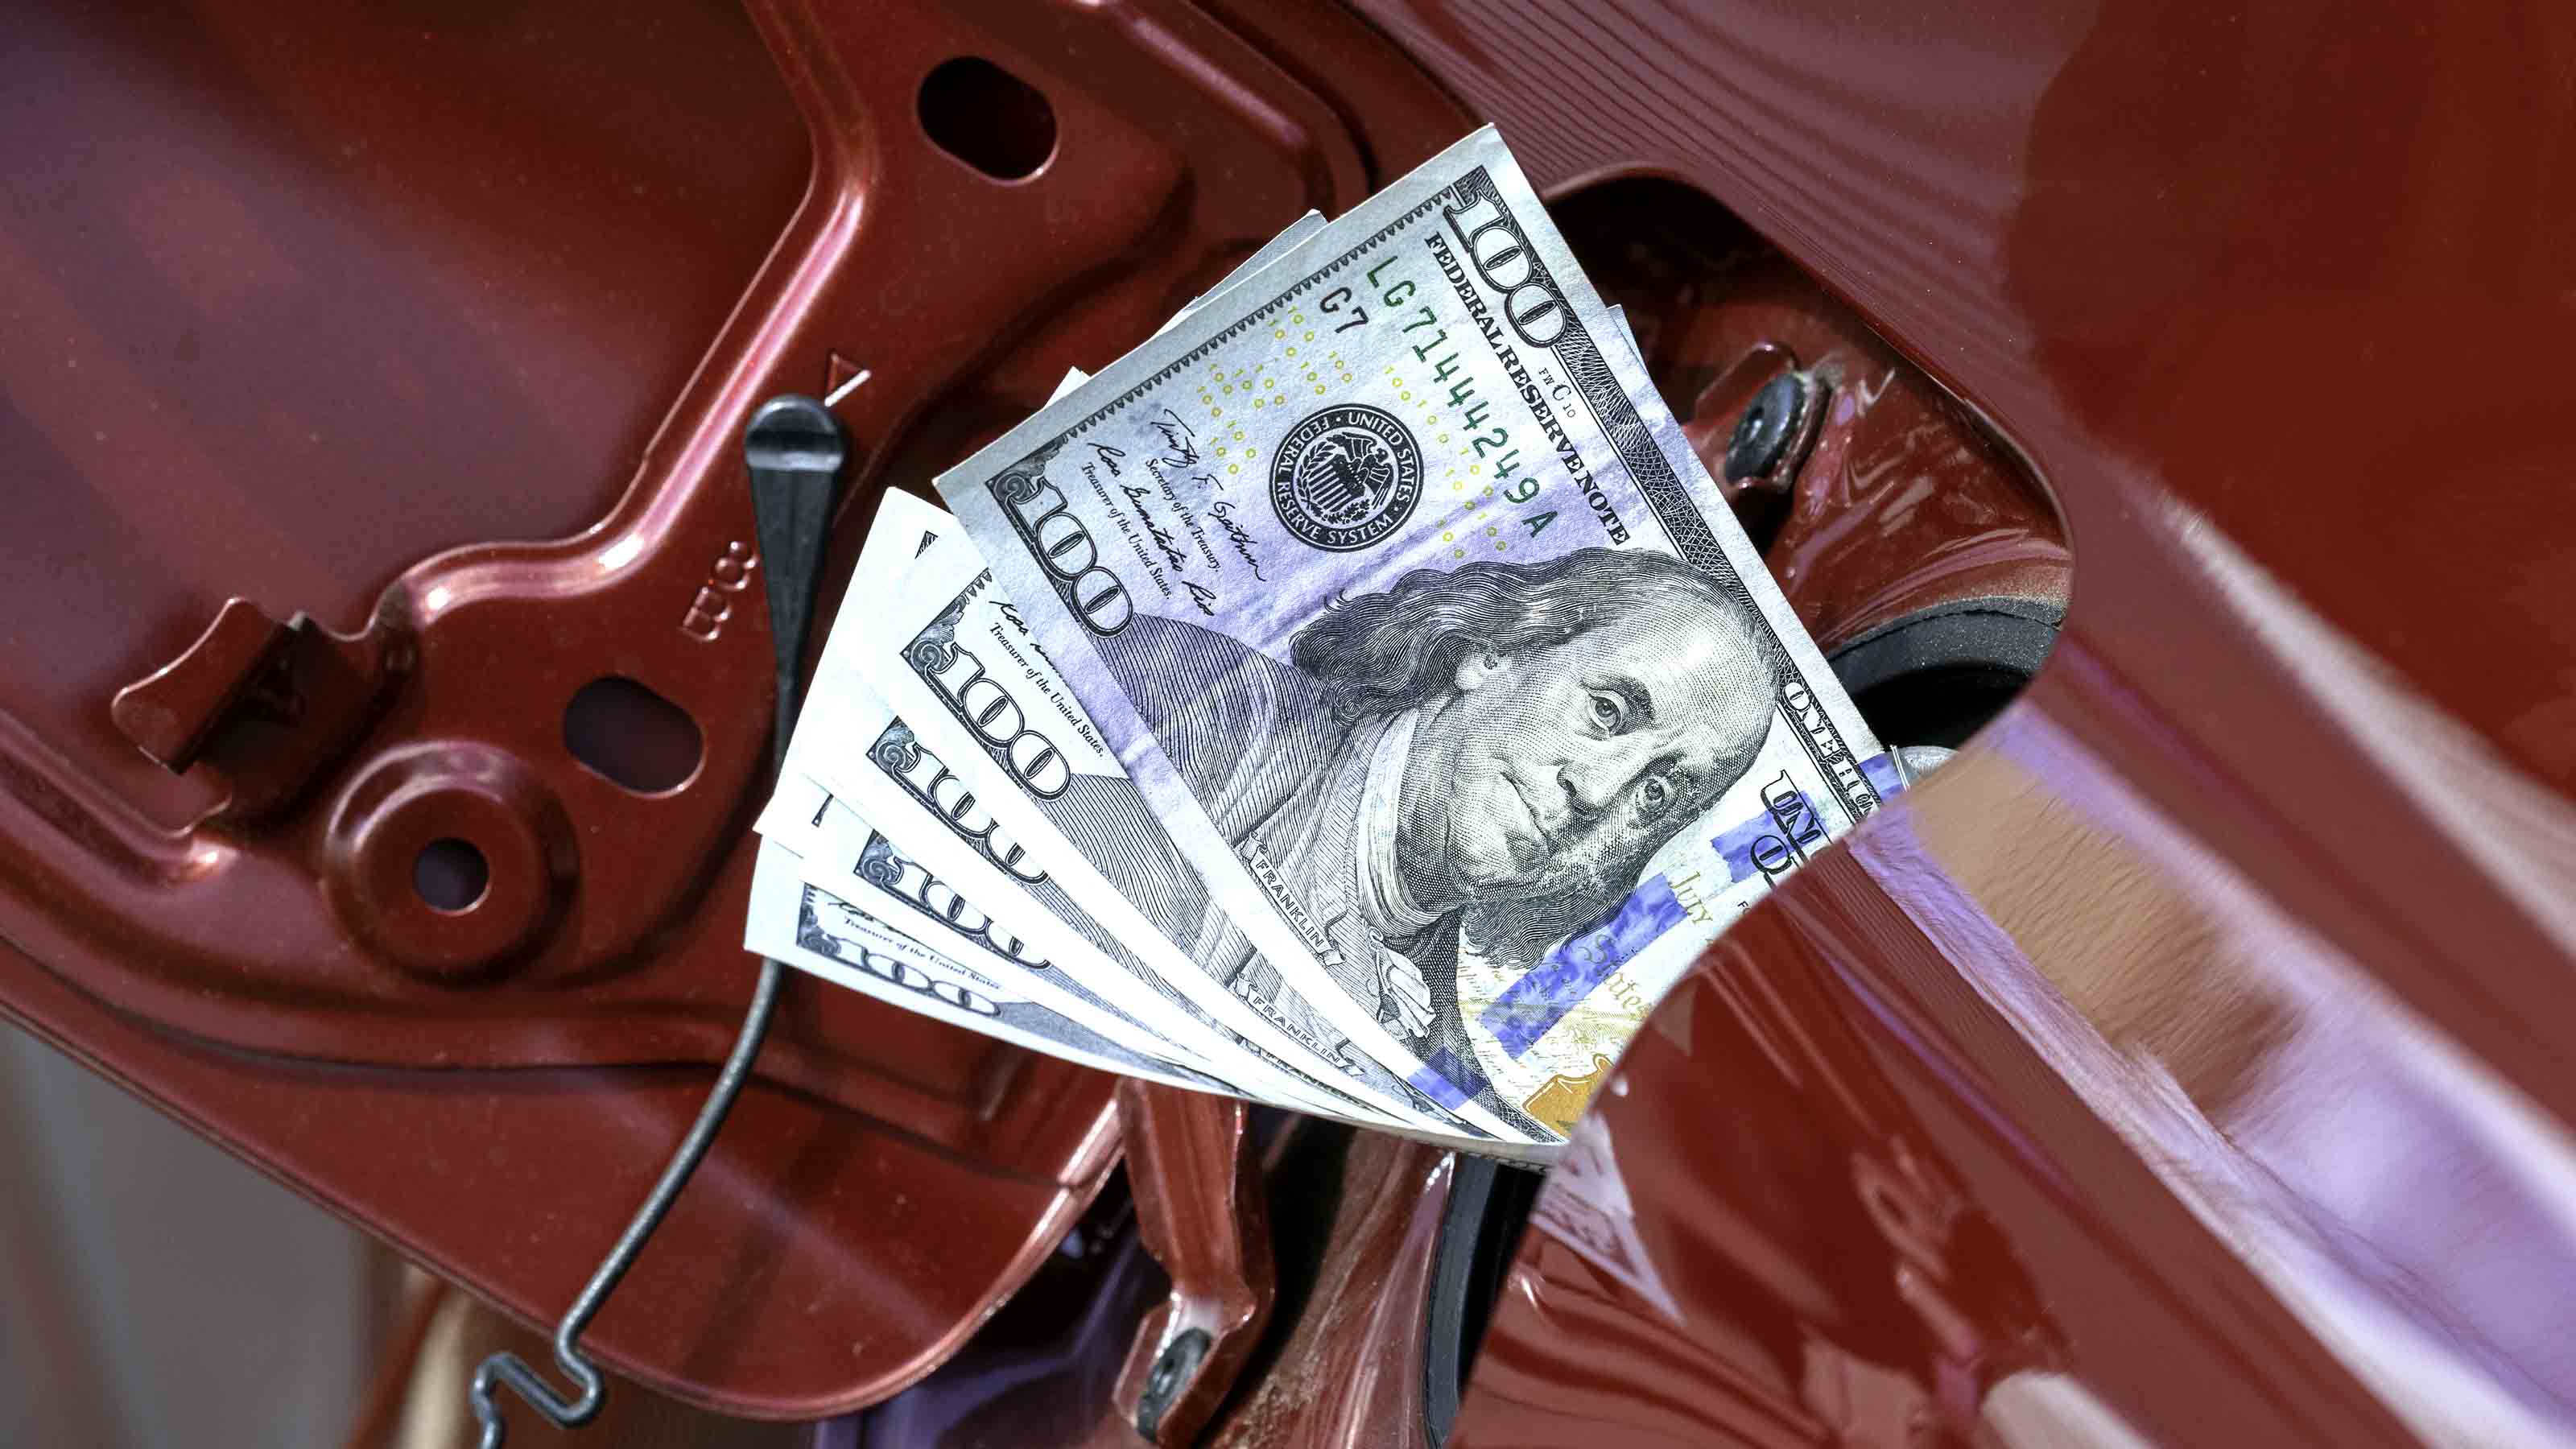 Some gas prices drop under a dollar per gallon due to coronavirus